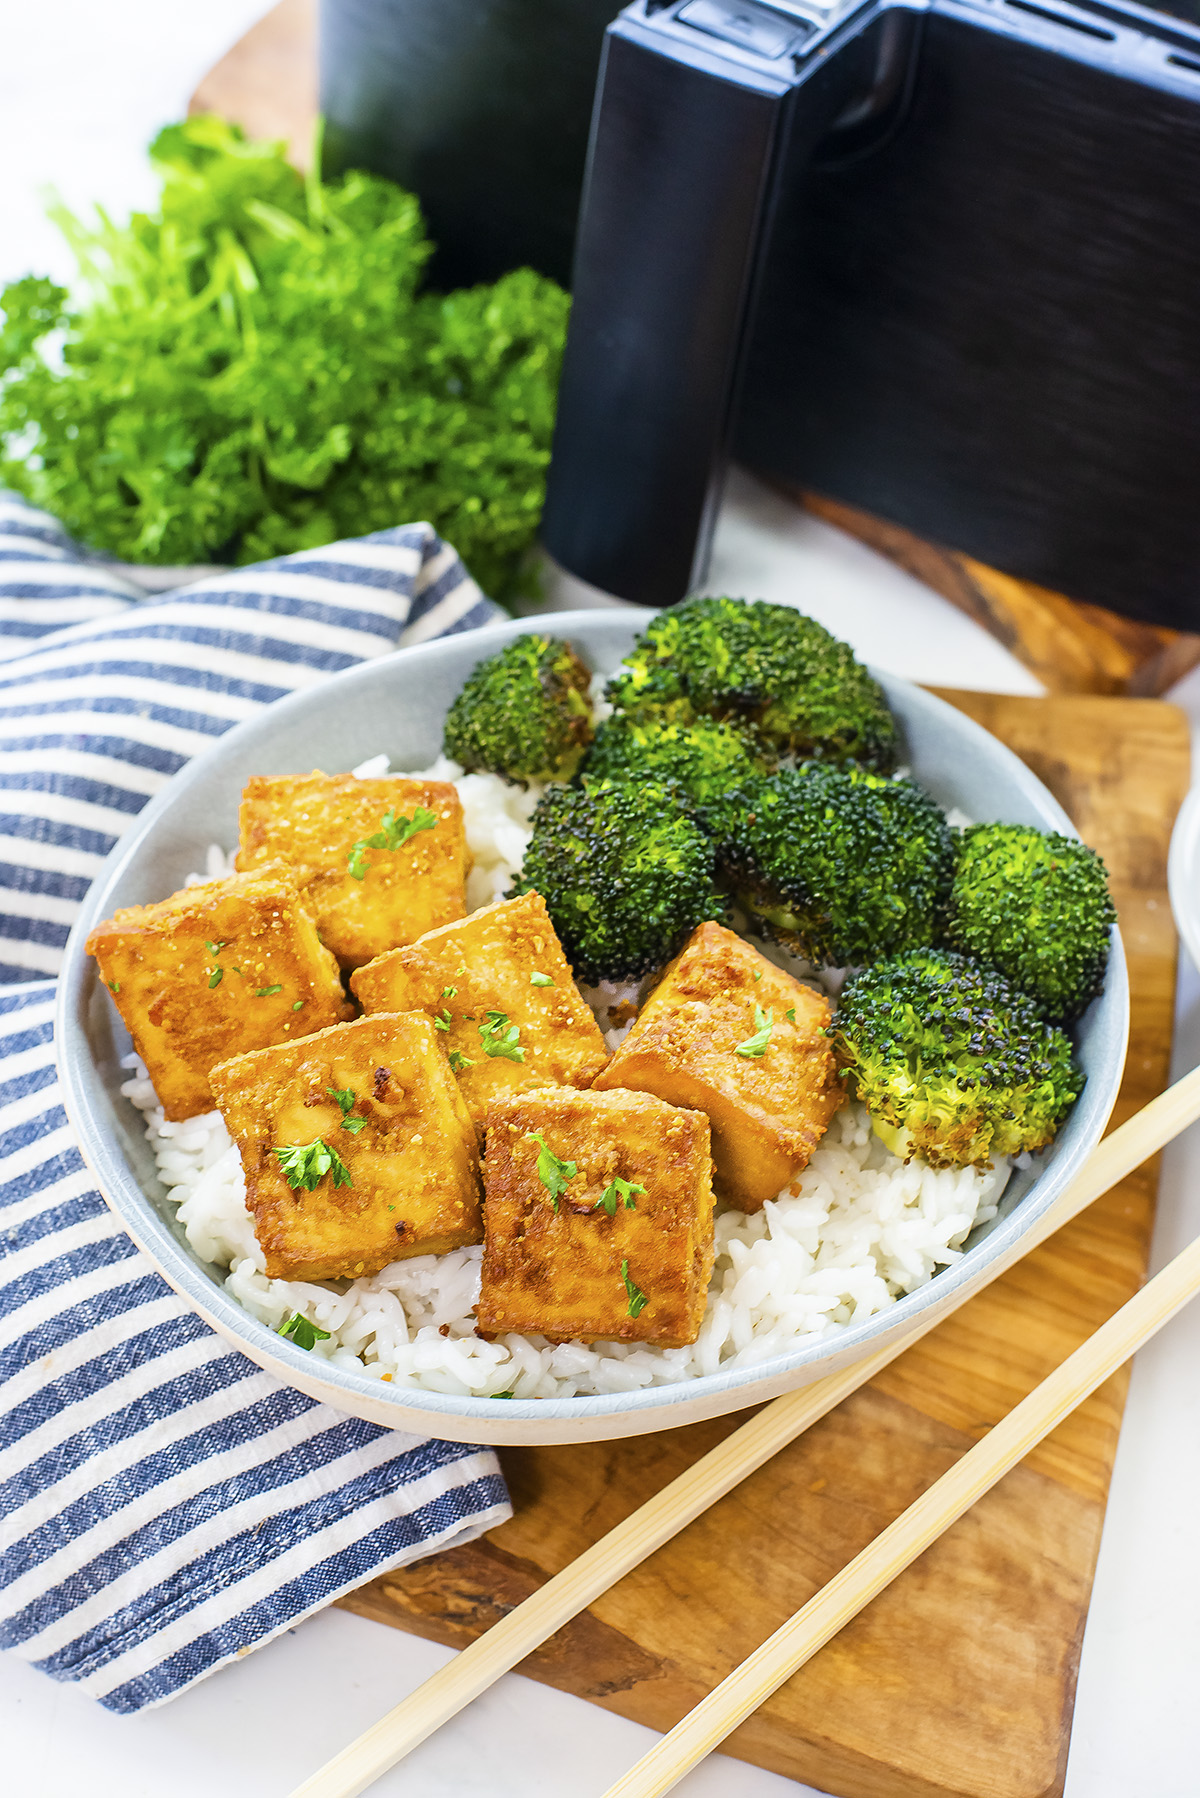 Tofu and broccoli on top of rice.